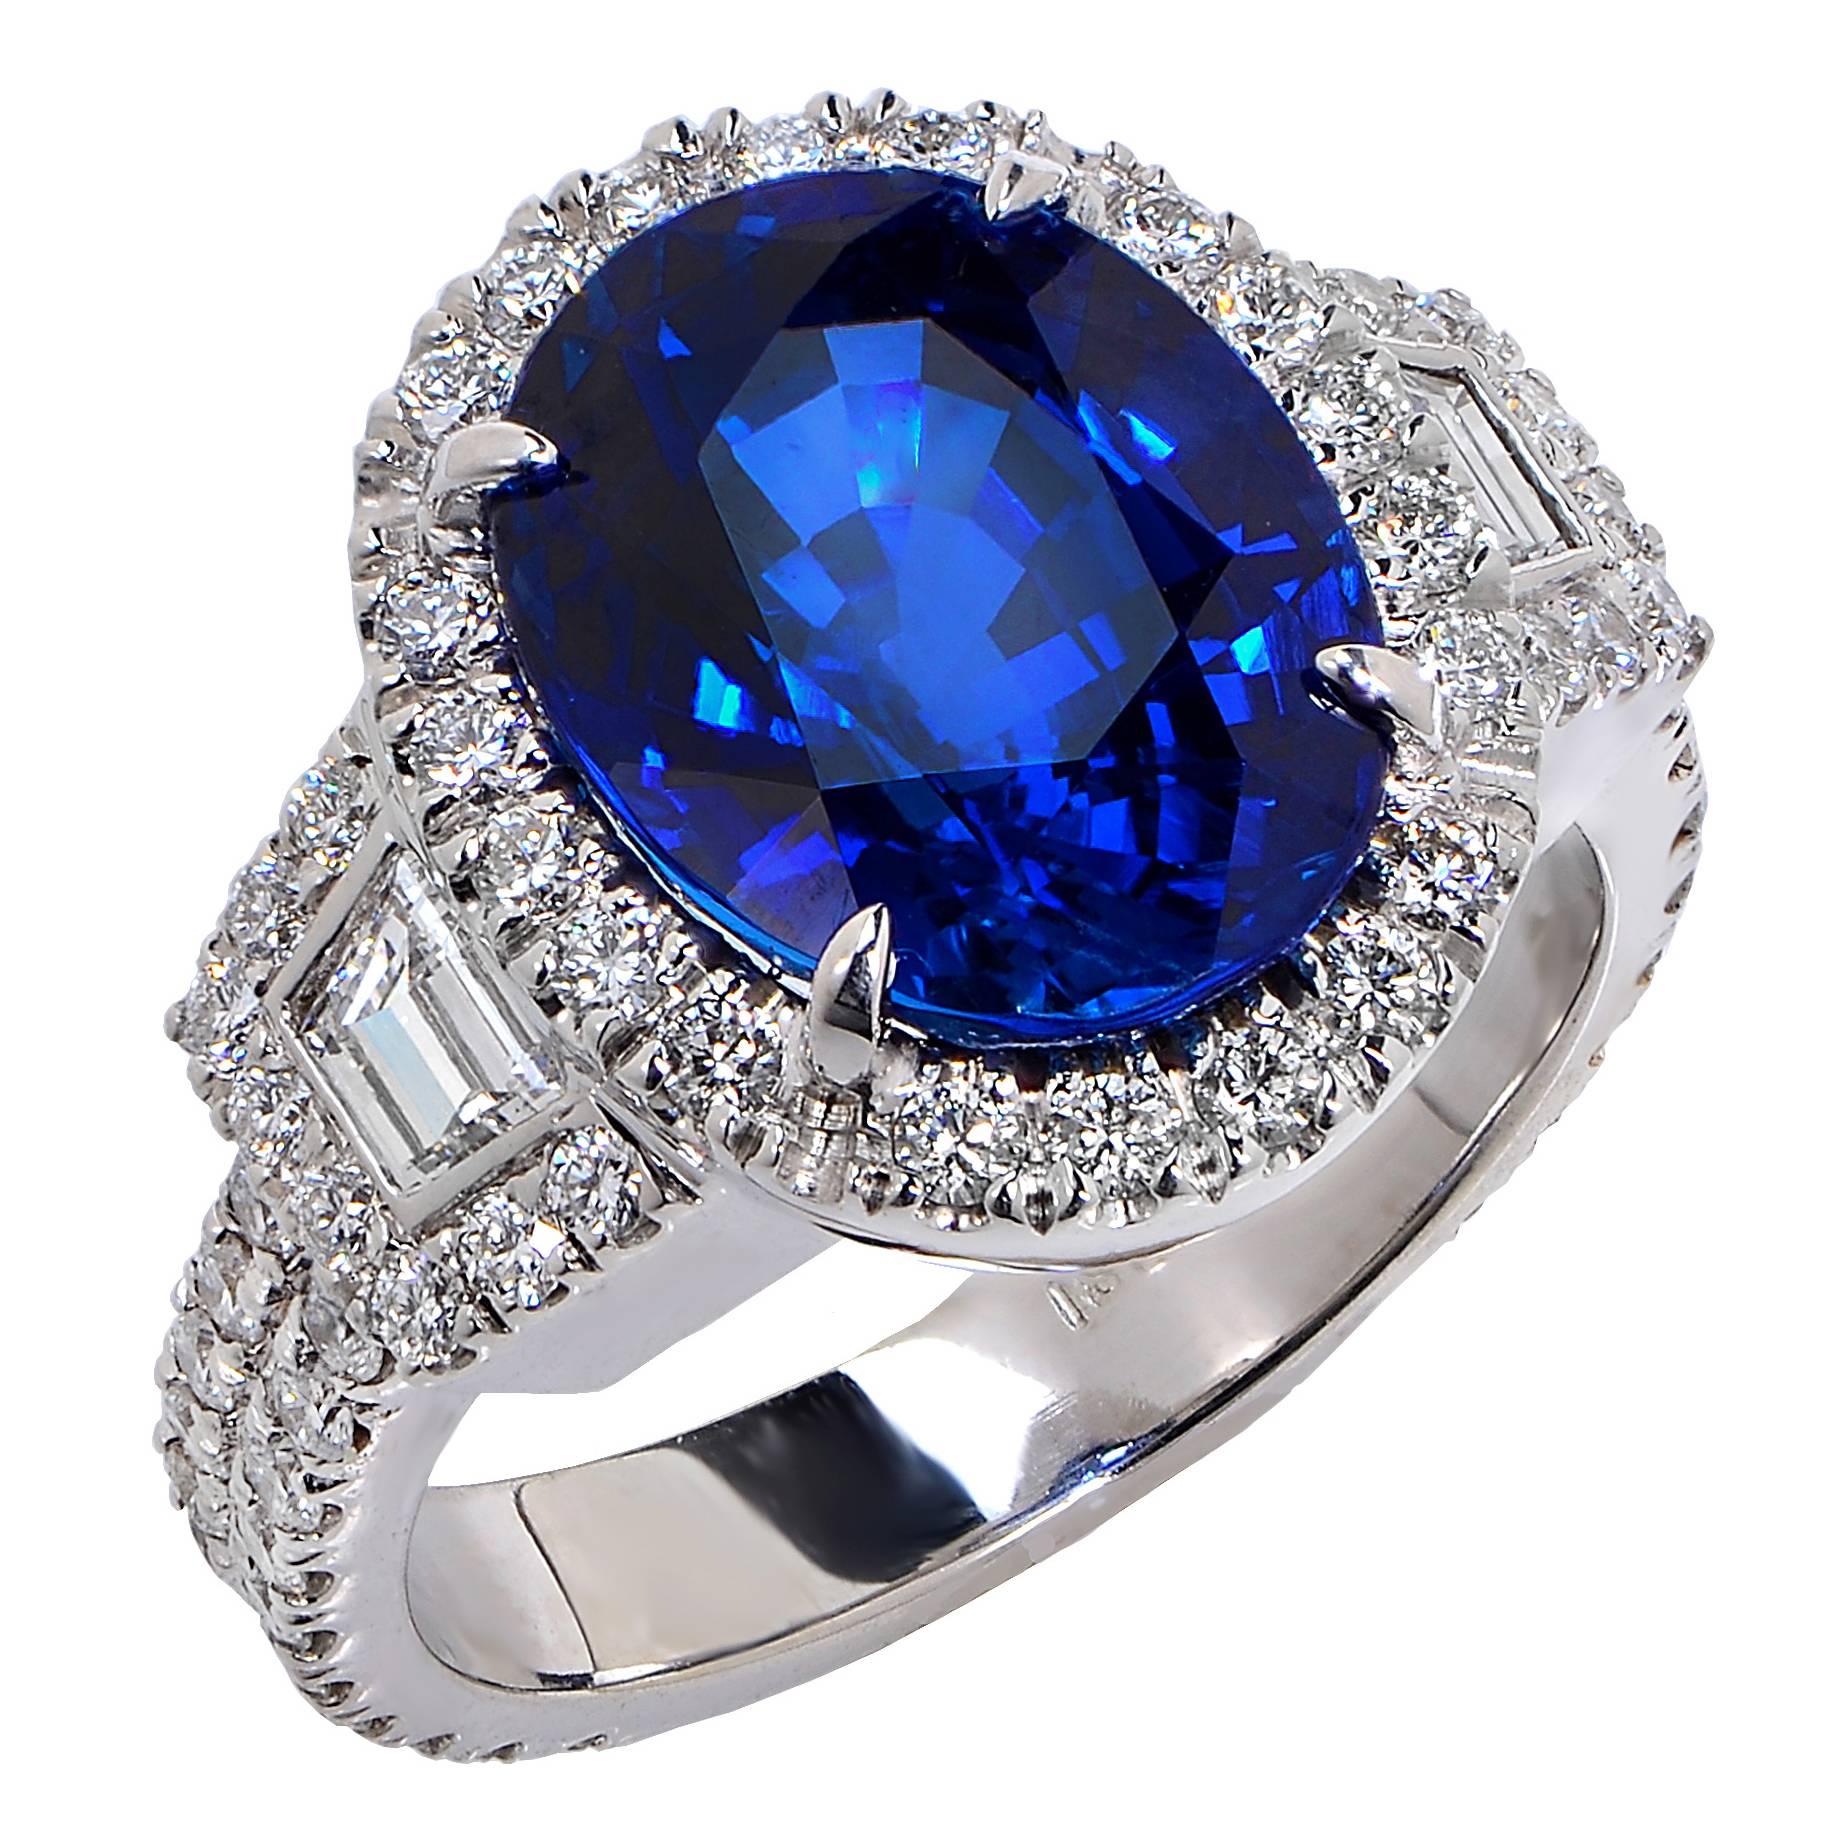 Vivid Diamonds Stunning 6.22 Carat Sapphire Diamond Gold Ring